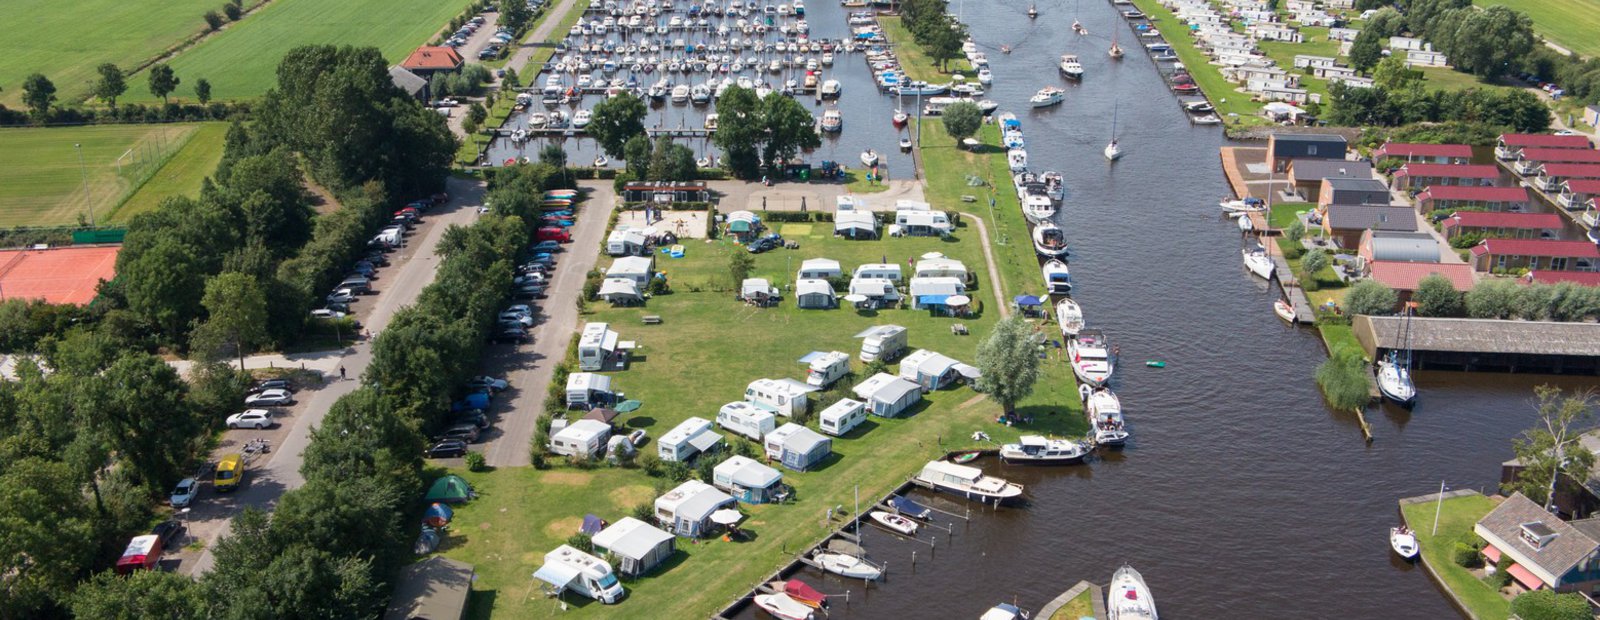 Bootverhuur in Friesland met jachthaven, camping en camperplaatsen. 